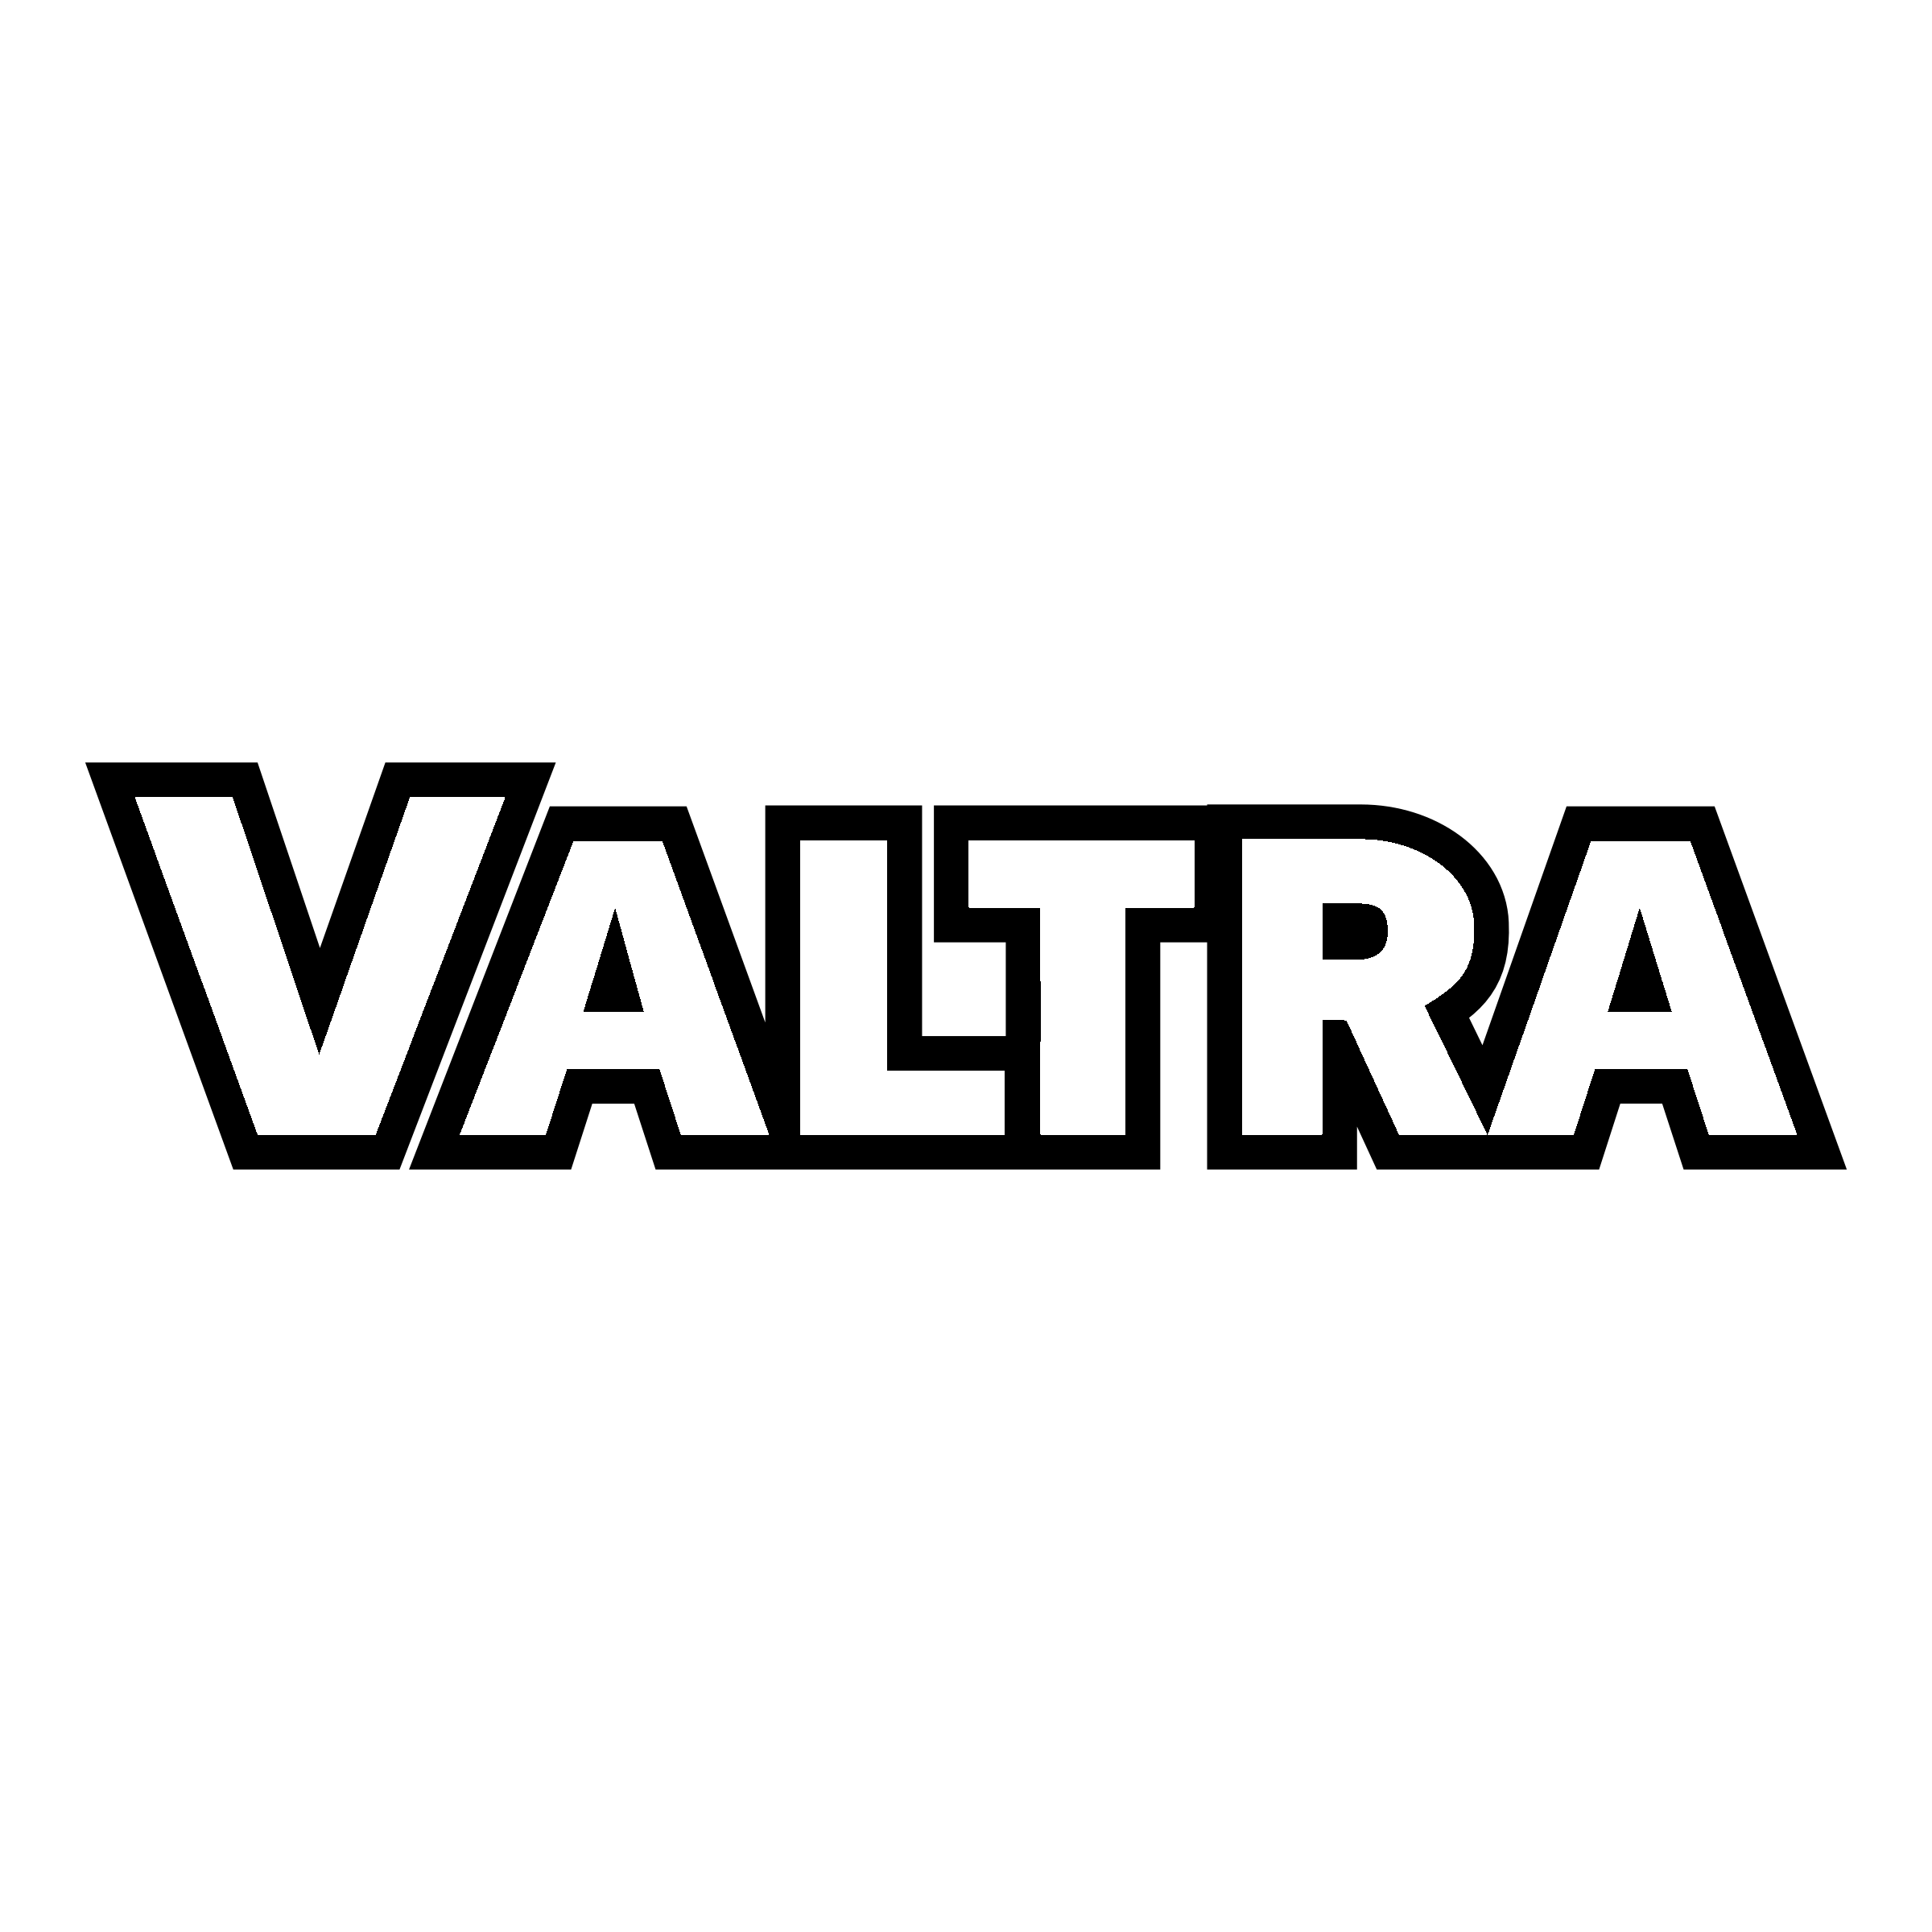 valtra logo black and white vector